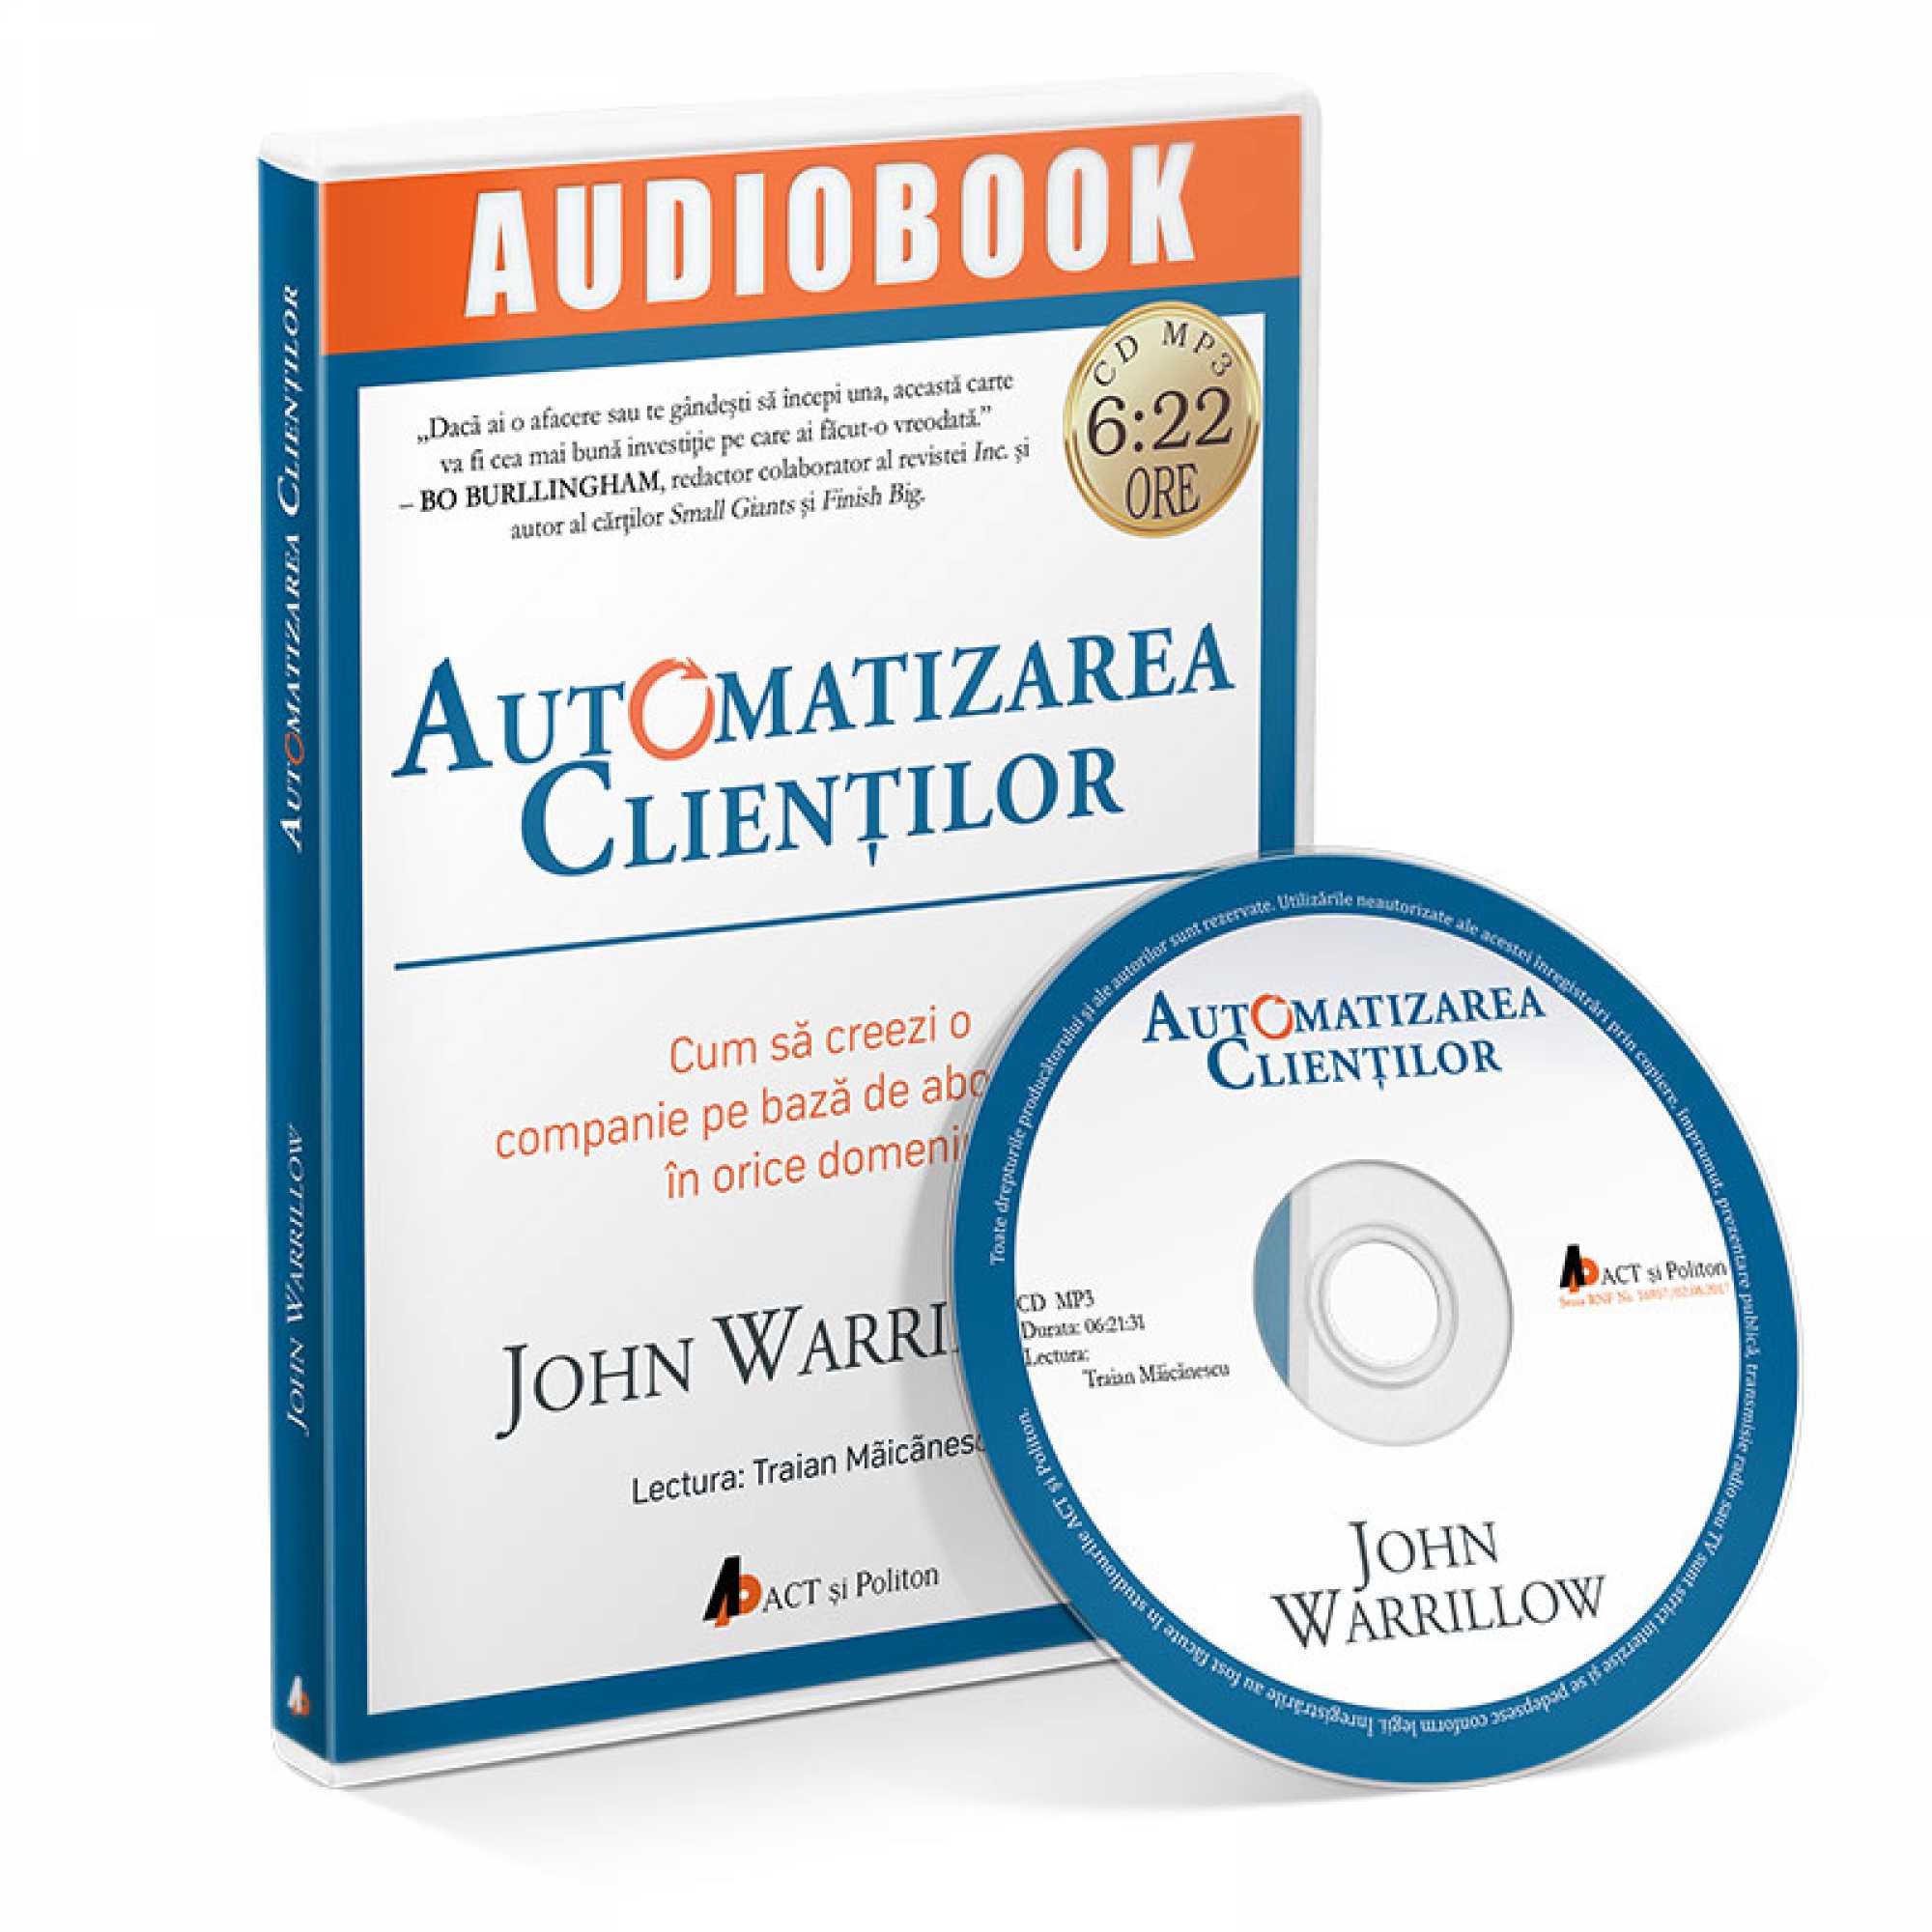 Automatizarea clientilor – Audiobook | John Warrillow carturesti.ro poza bestsellers.ro